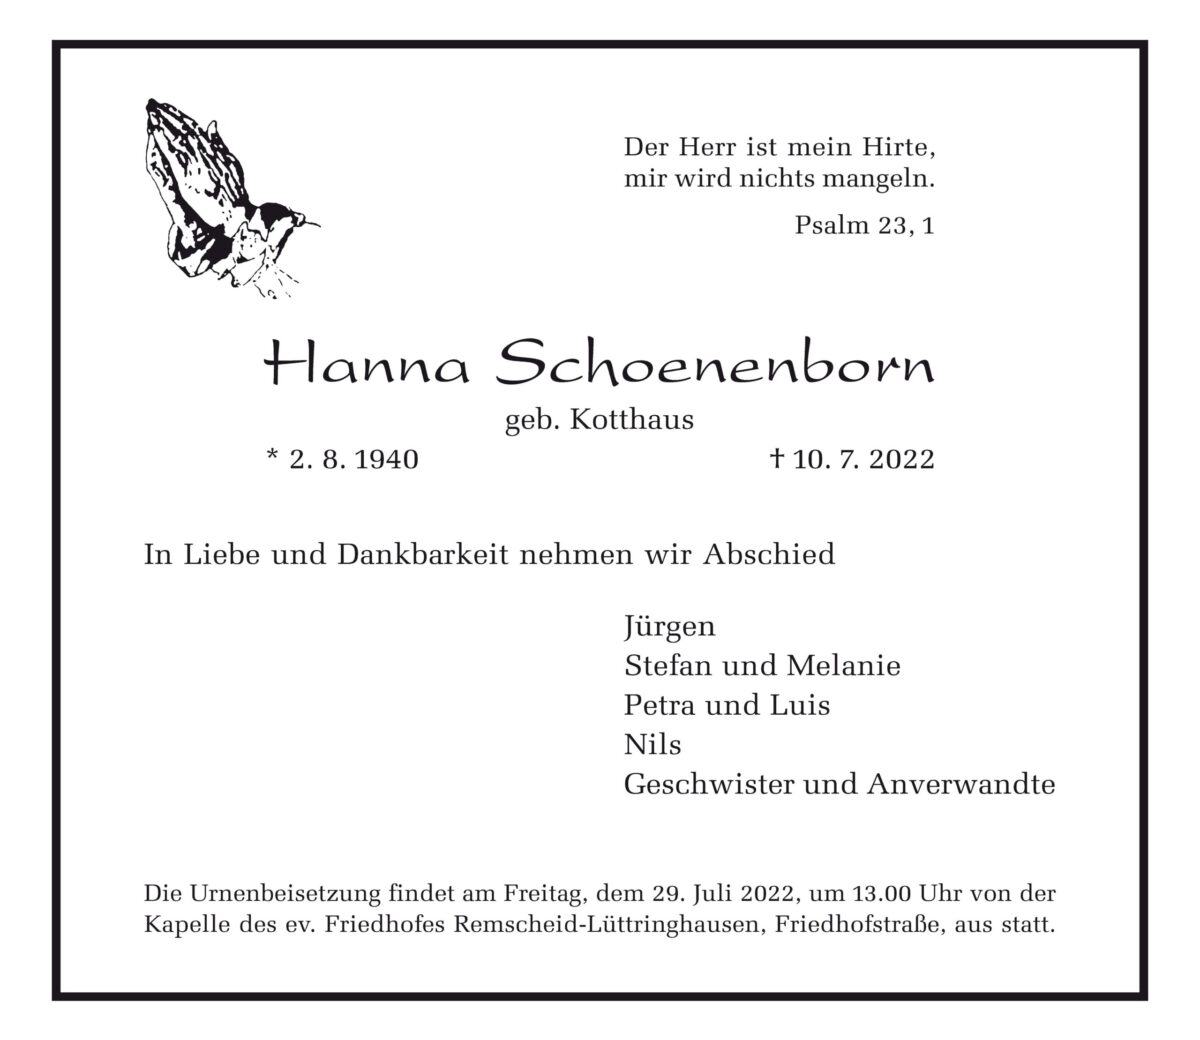 Hanna Schoenenborn